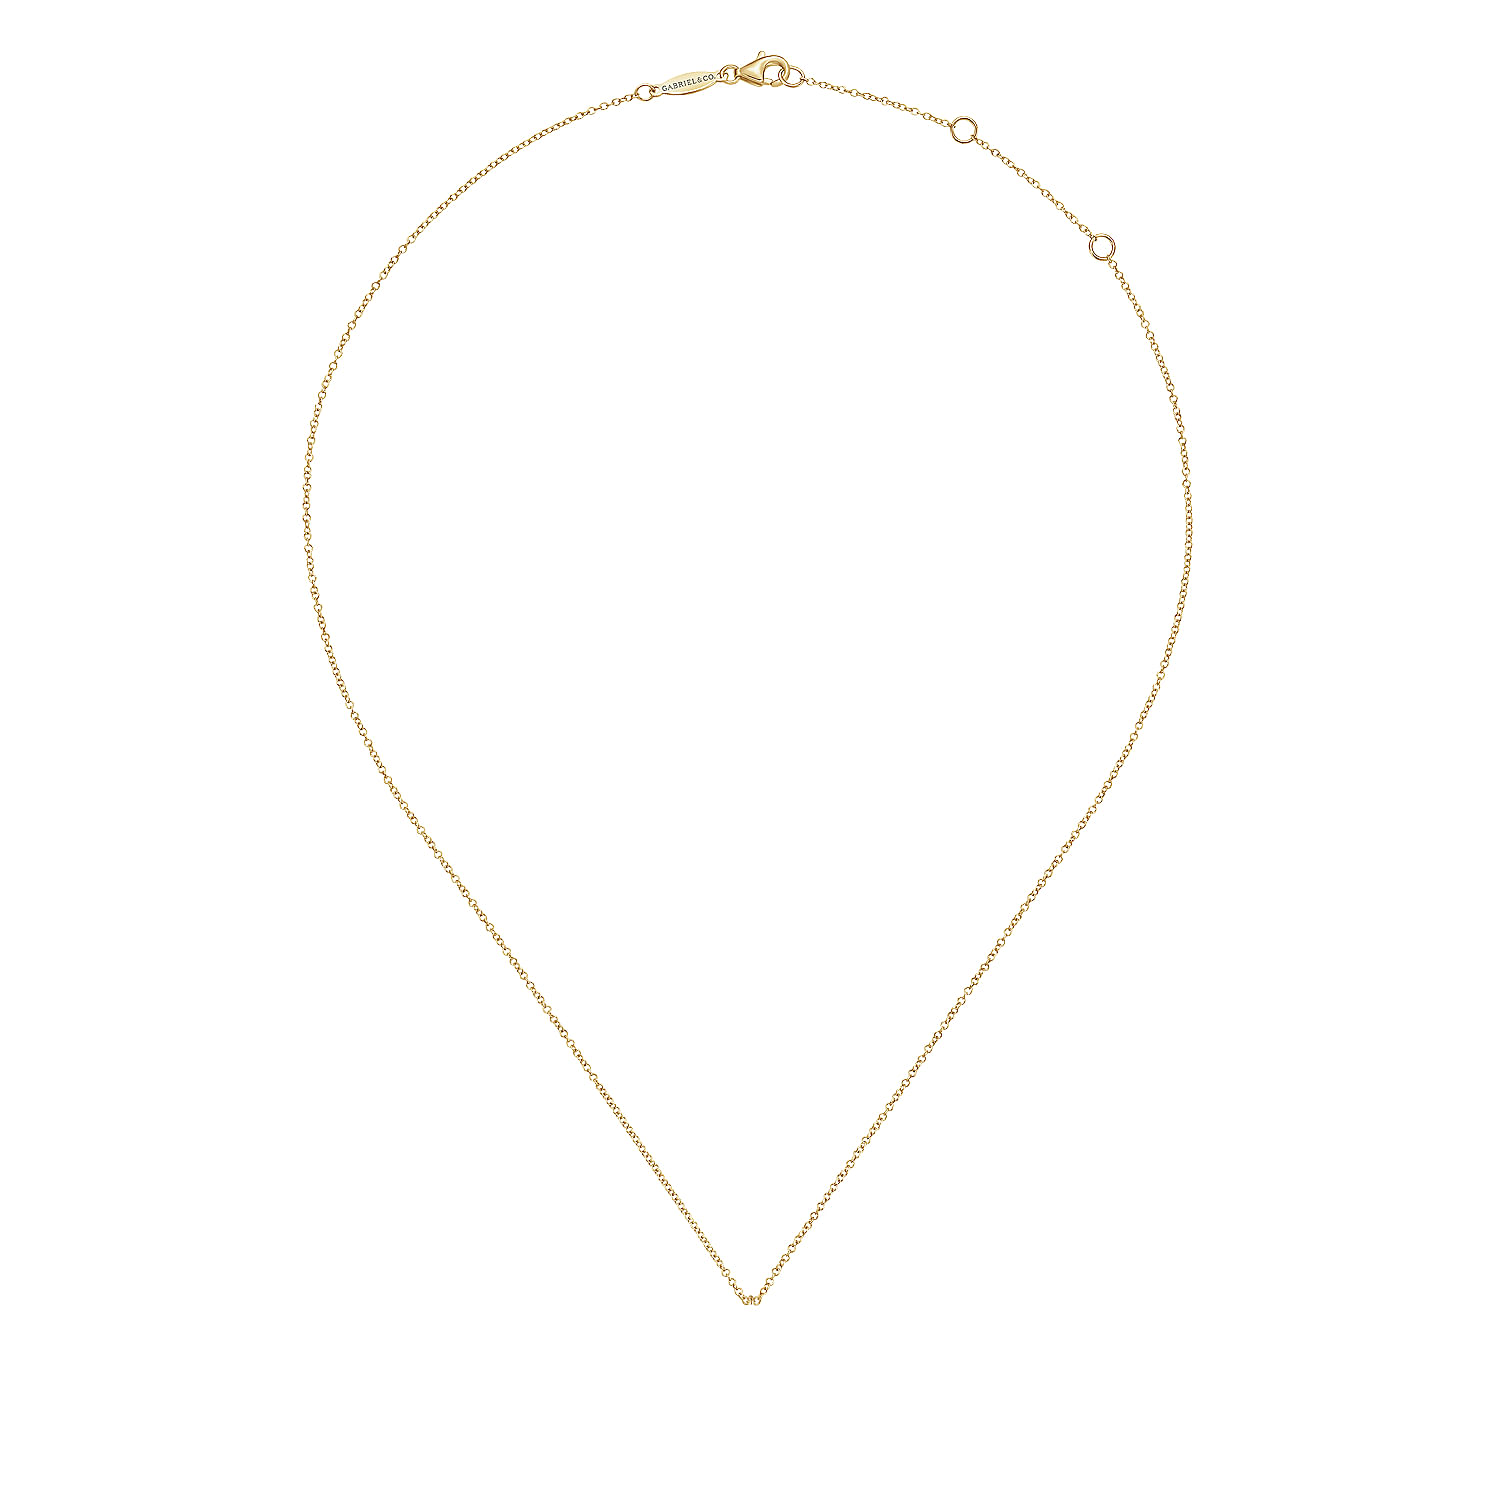 14K Yellow Gold Teardrop Diamond Pavé Pendant Necklace with Beaded Frame